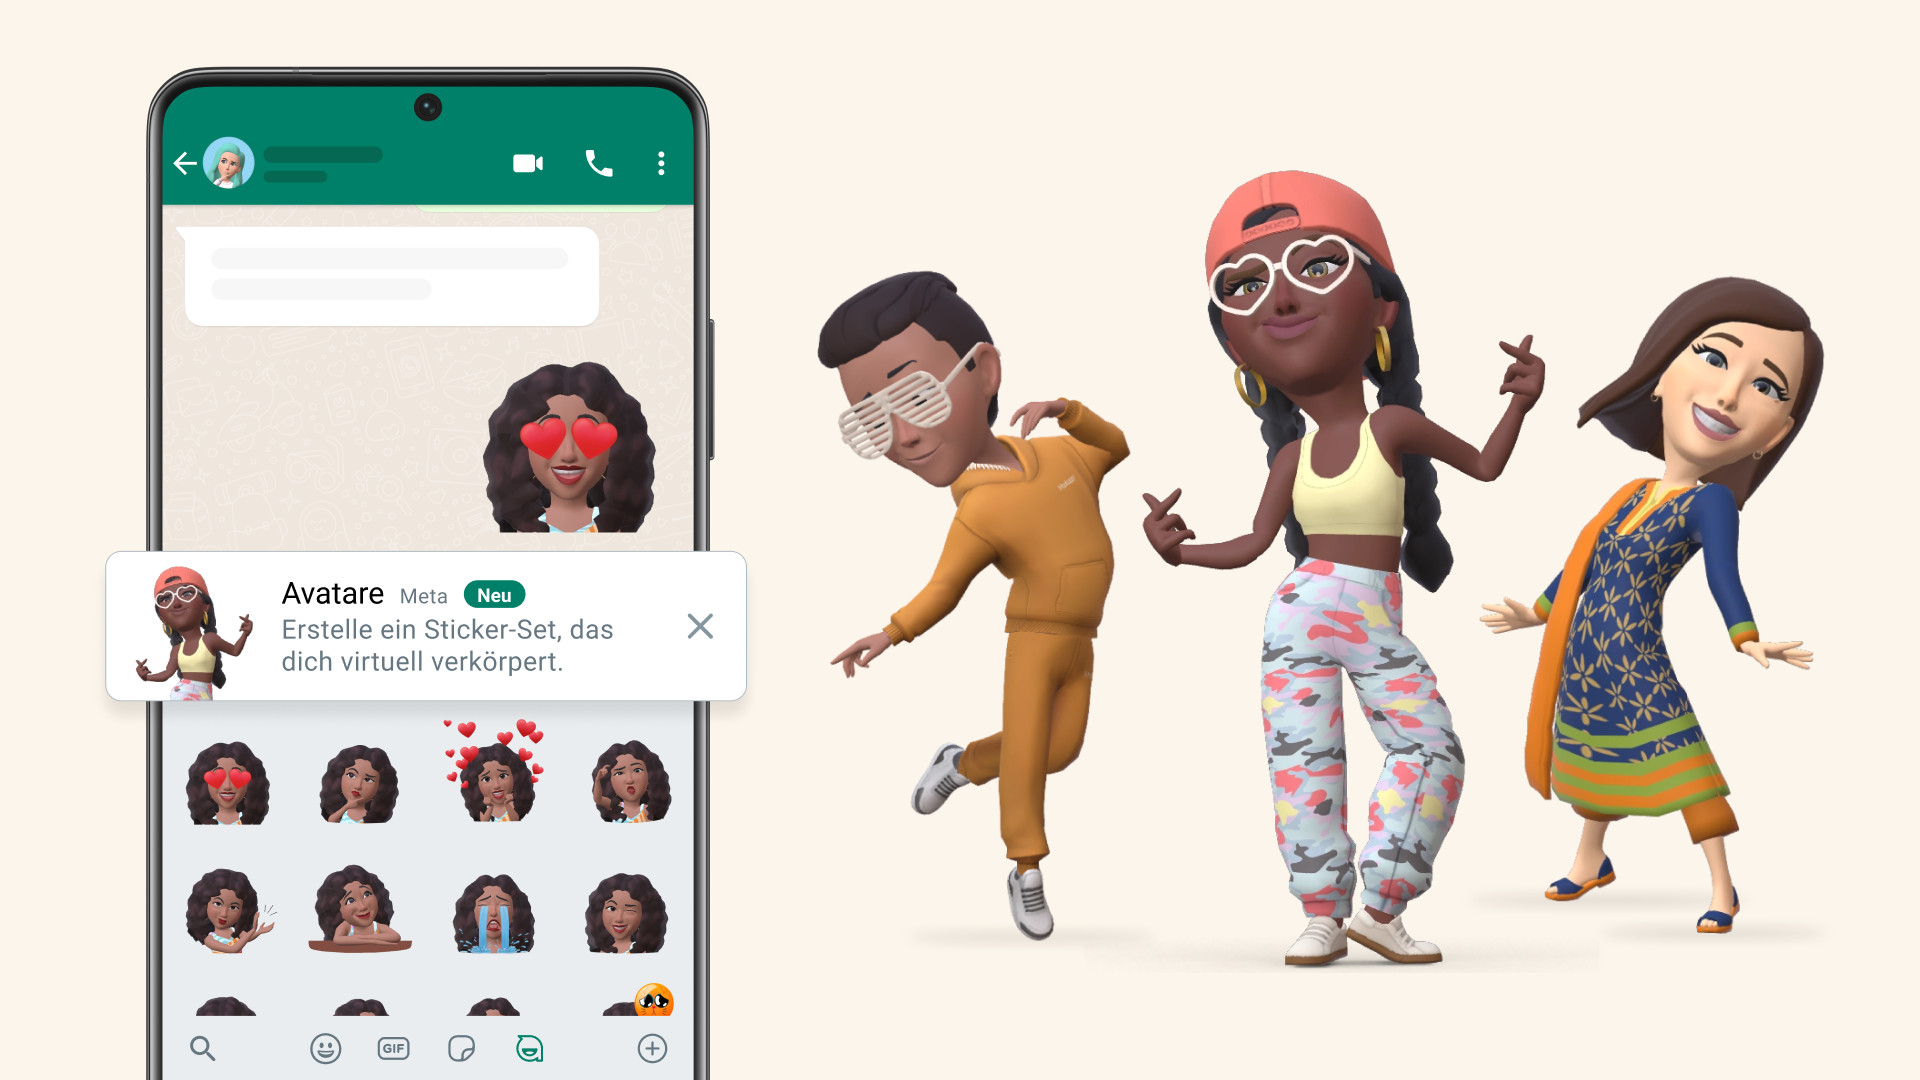 New Whatsapp feature: Meta introduces customizable avatars